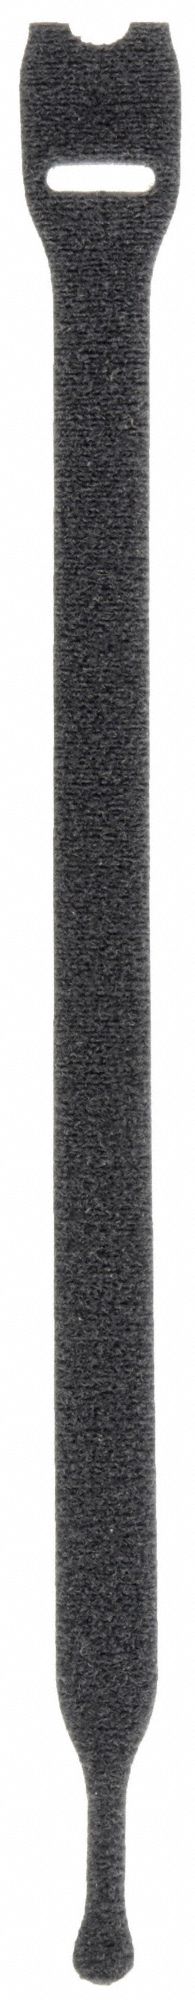 Velcro Brand Perforated Straps - 1/2 x 6, Black - ULINE - S-23591